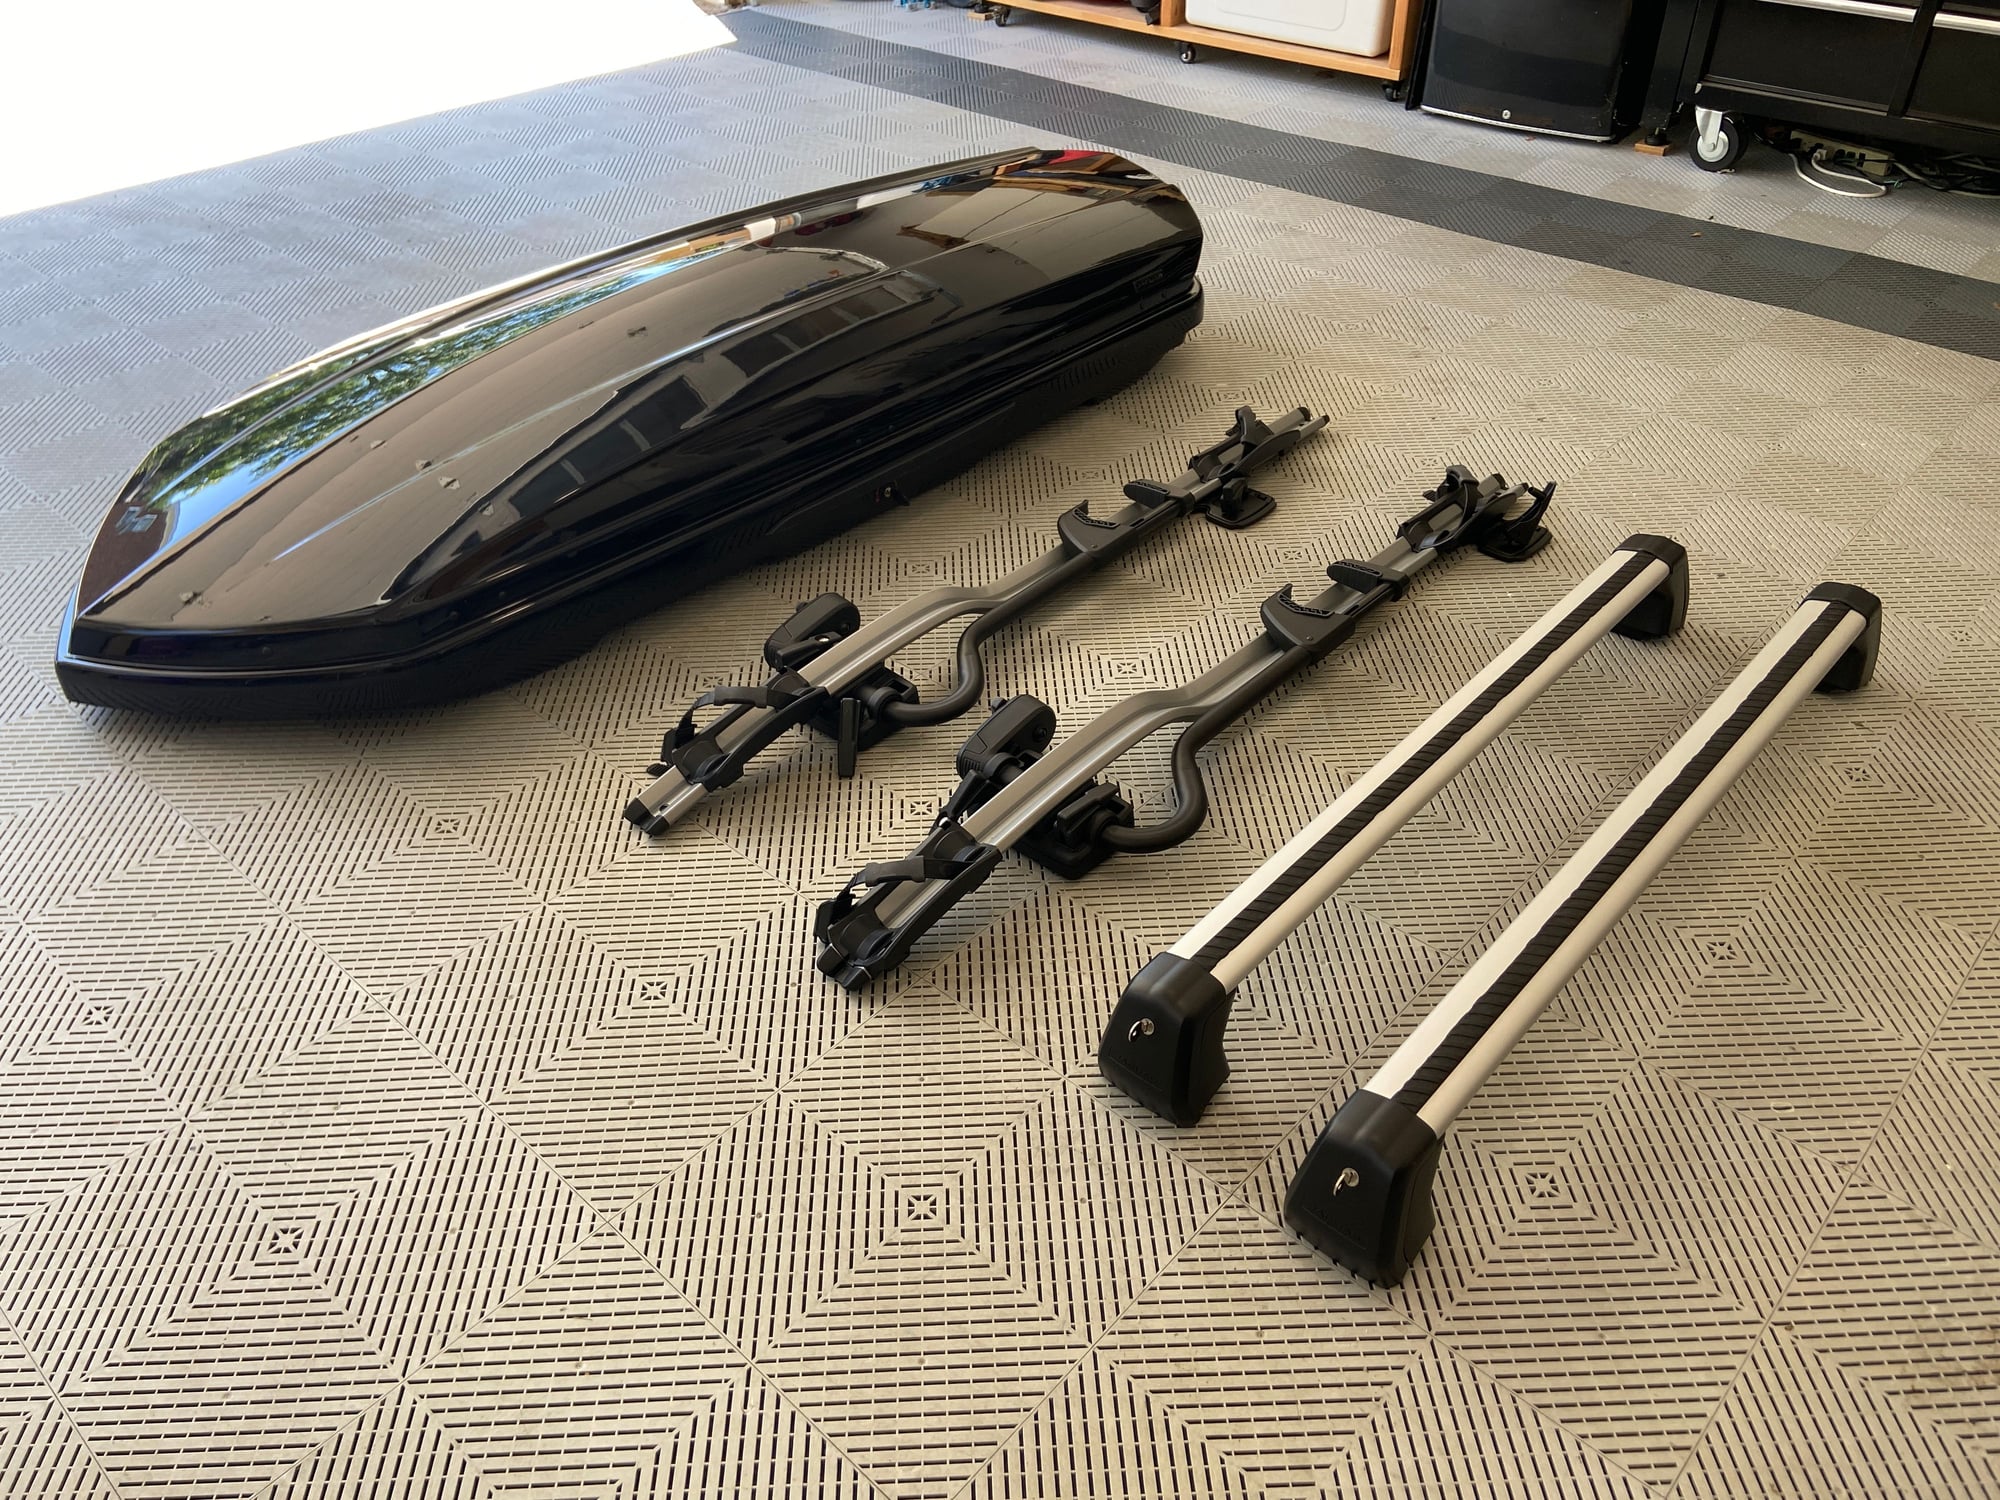 Accessories - Jaguar roof accessories (stowage box, cross bars, bike racks) - Used - 2018 to 2022 Jaguar XF - Nashville, TN 37221, United States